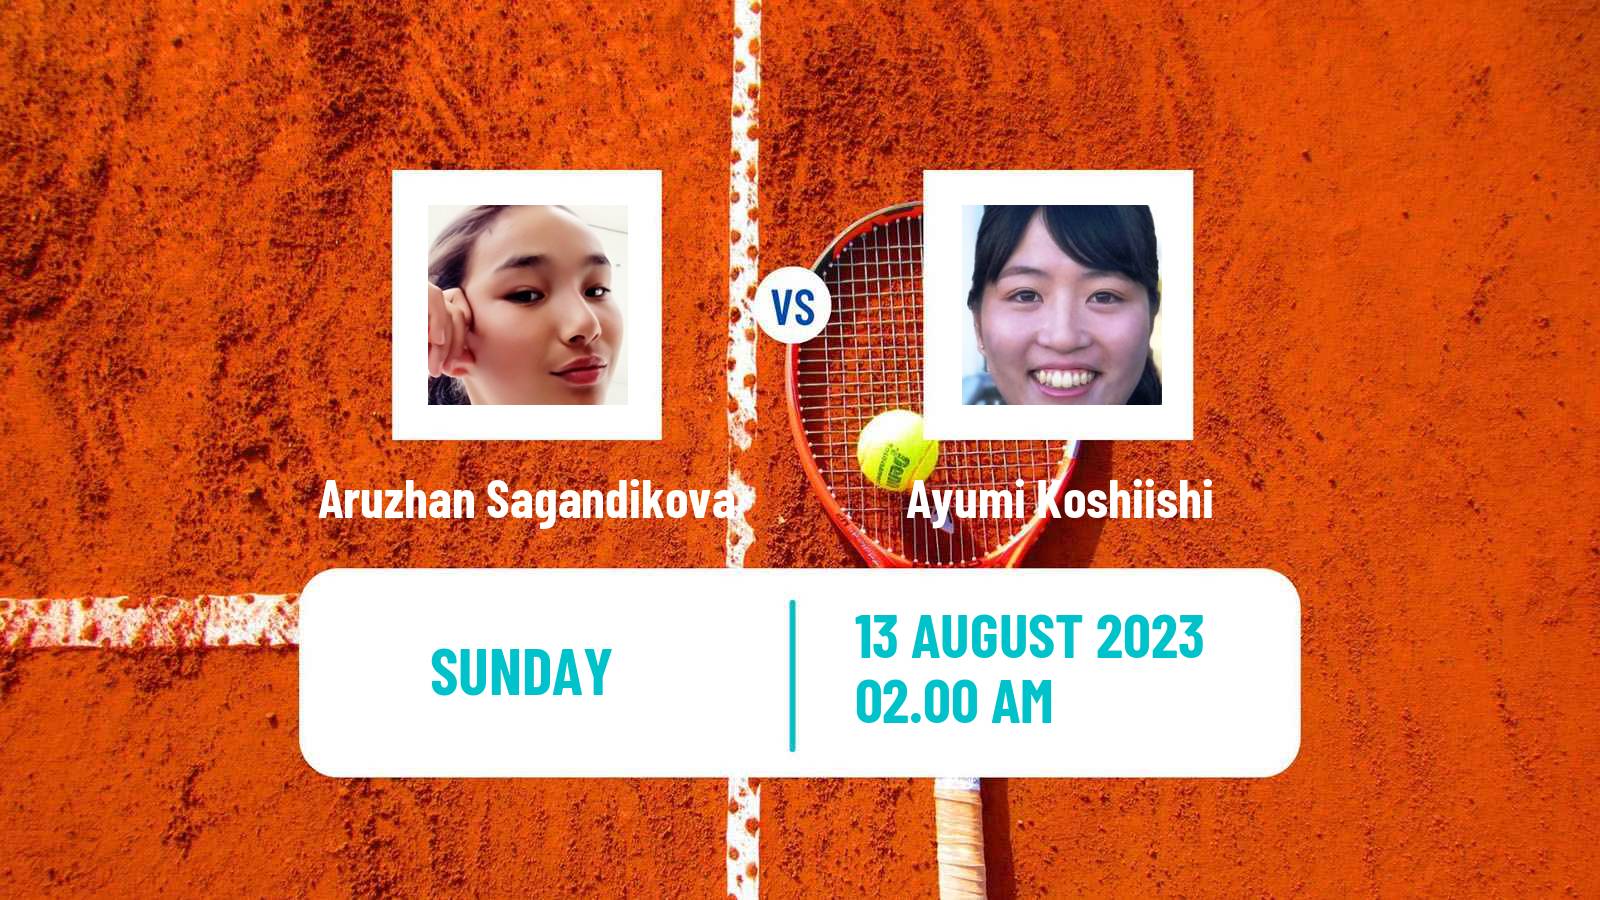 Tennis ITF W15 Ust Kamenogorsk Women Aruzhan Sagandikova - Ayumi Koshiishi